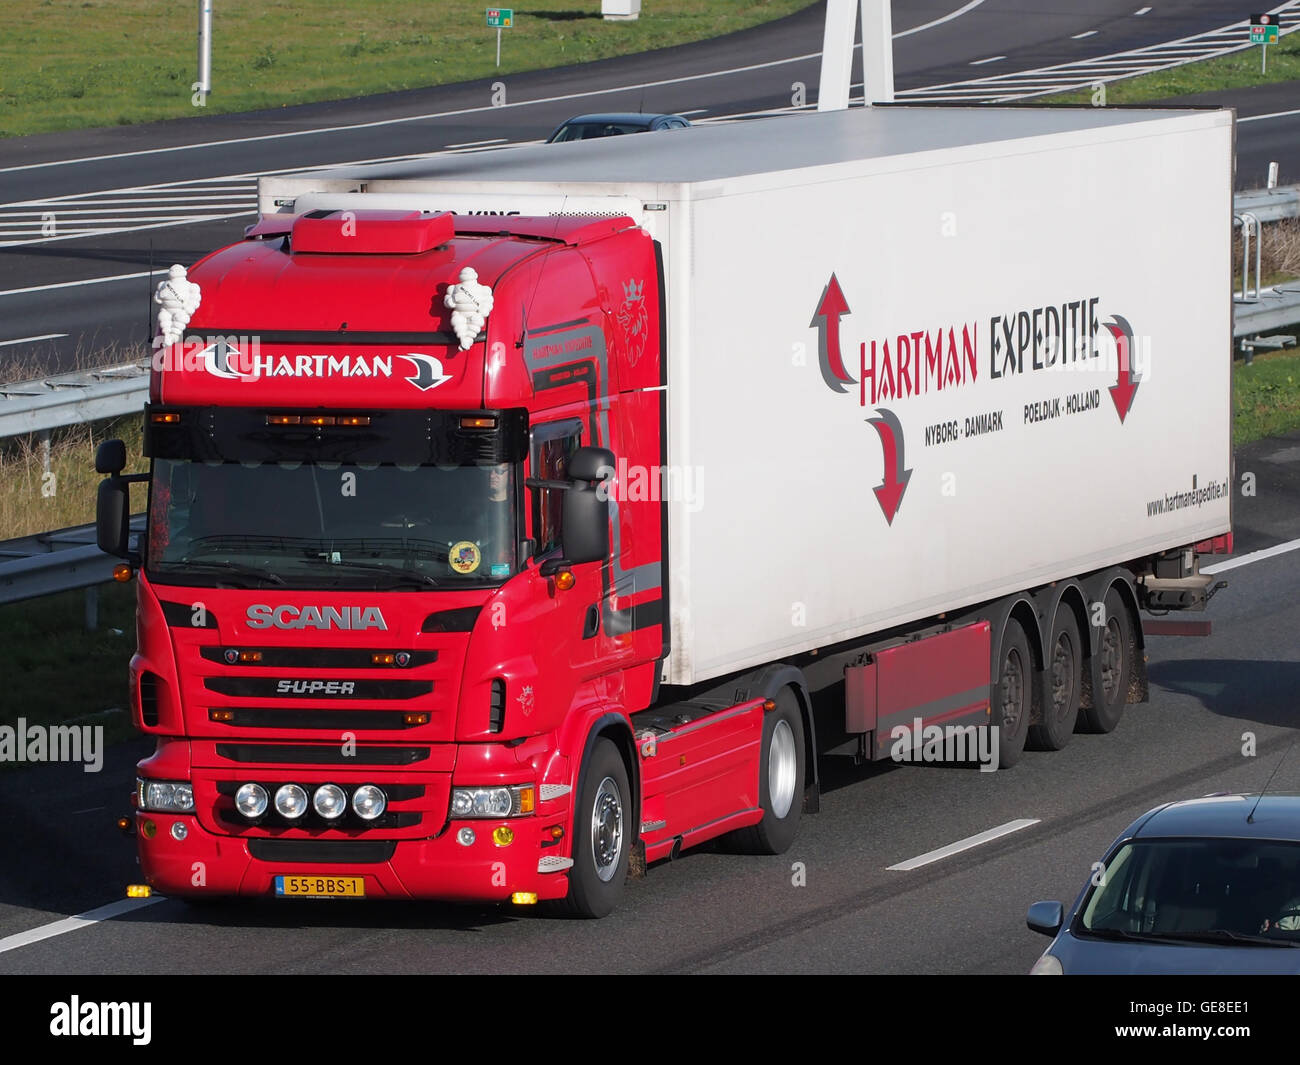 Super Scania, Hartman Expeditie Stock Photo